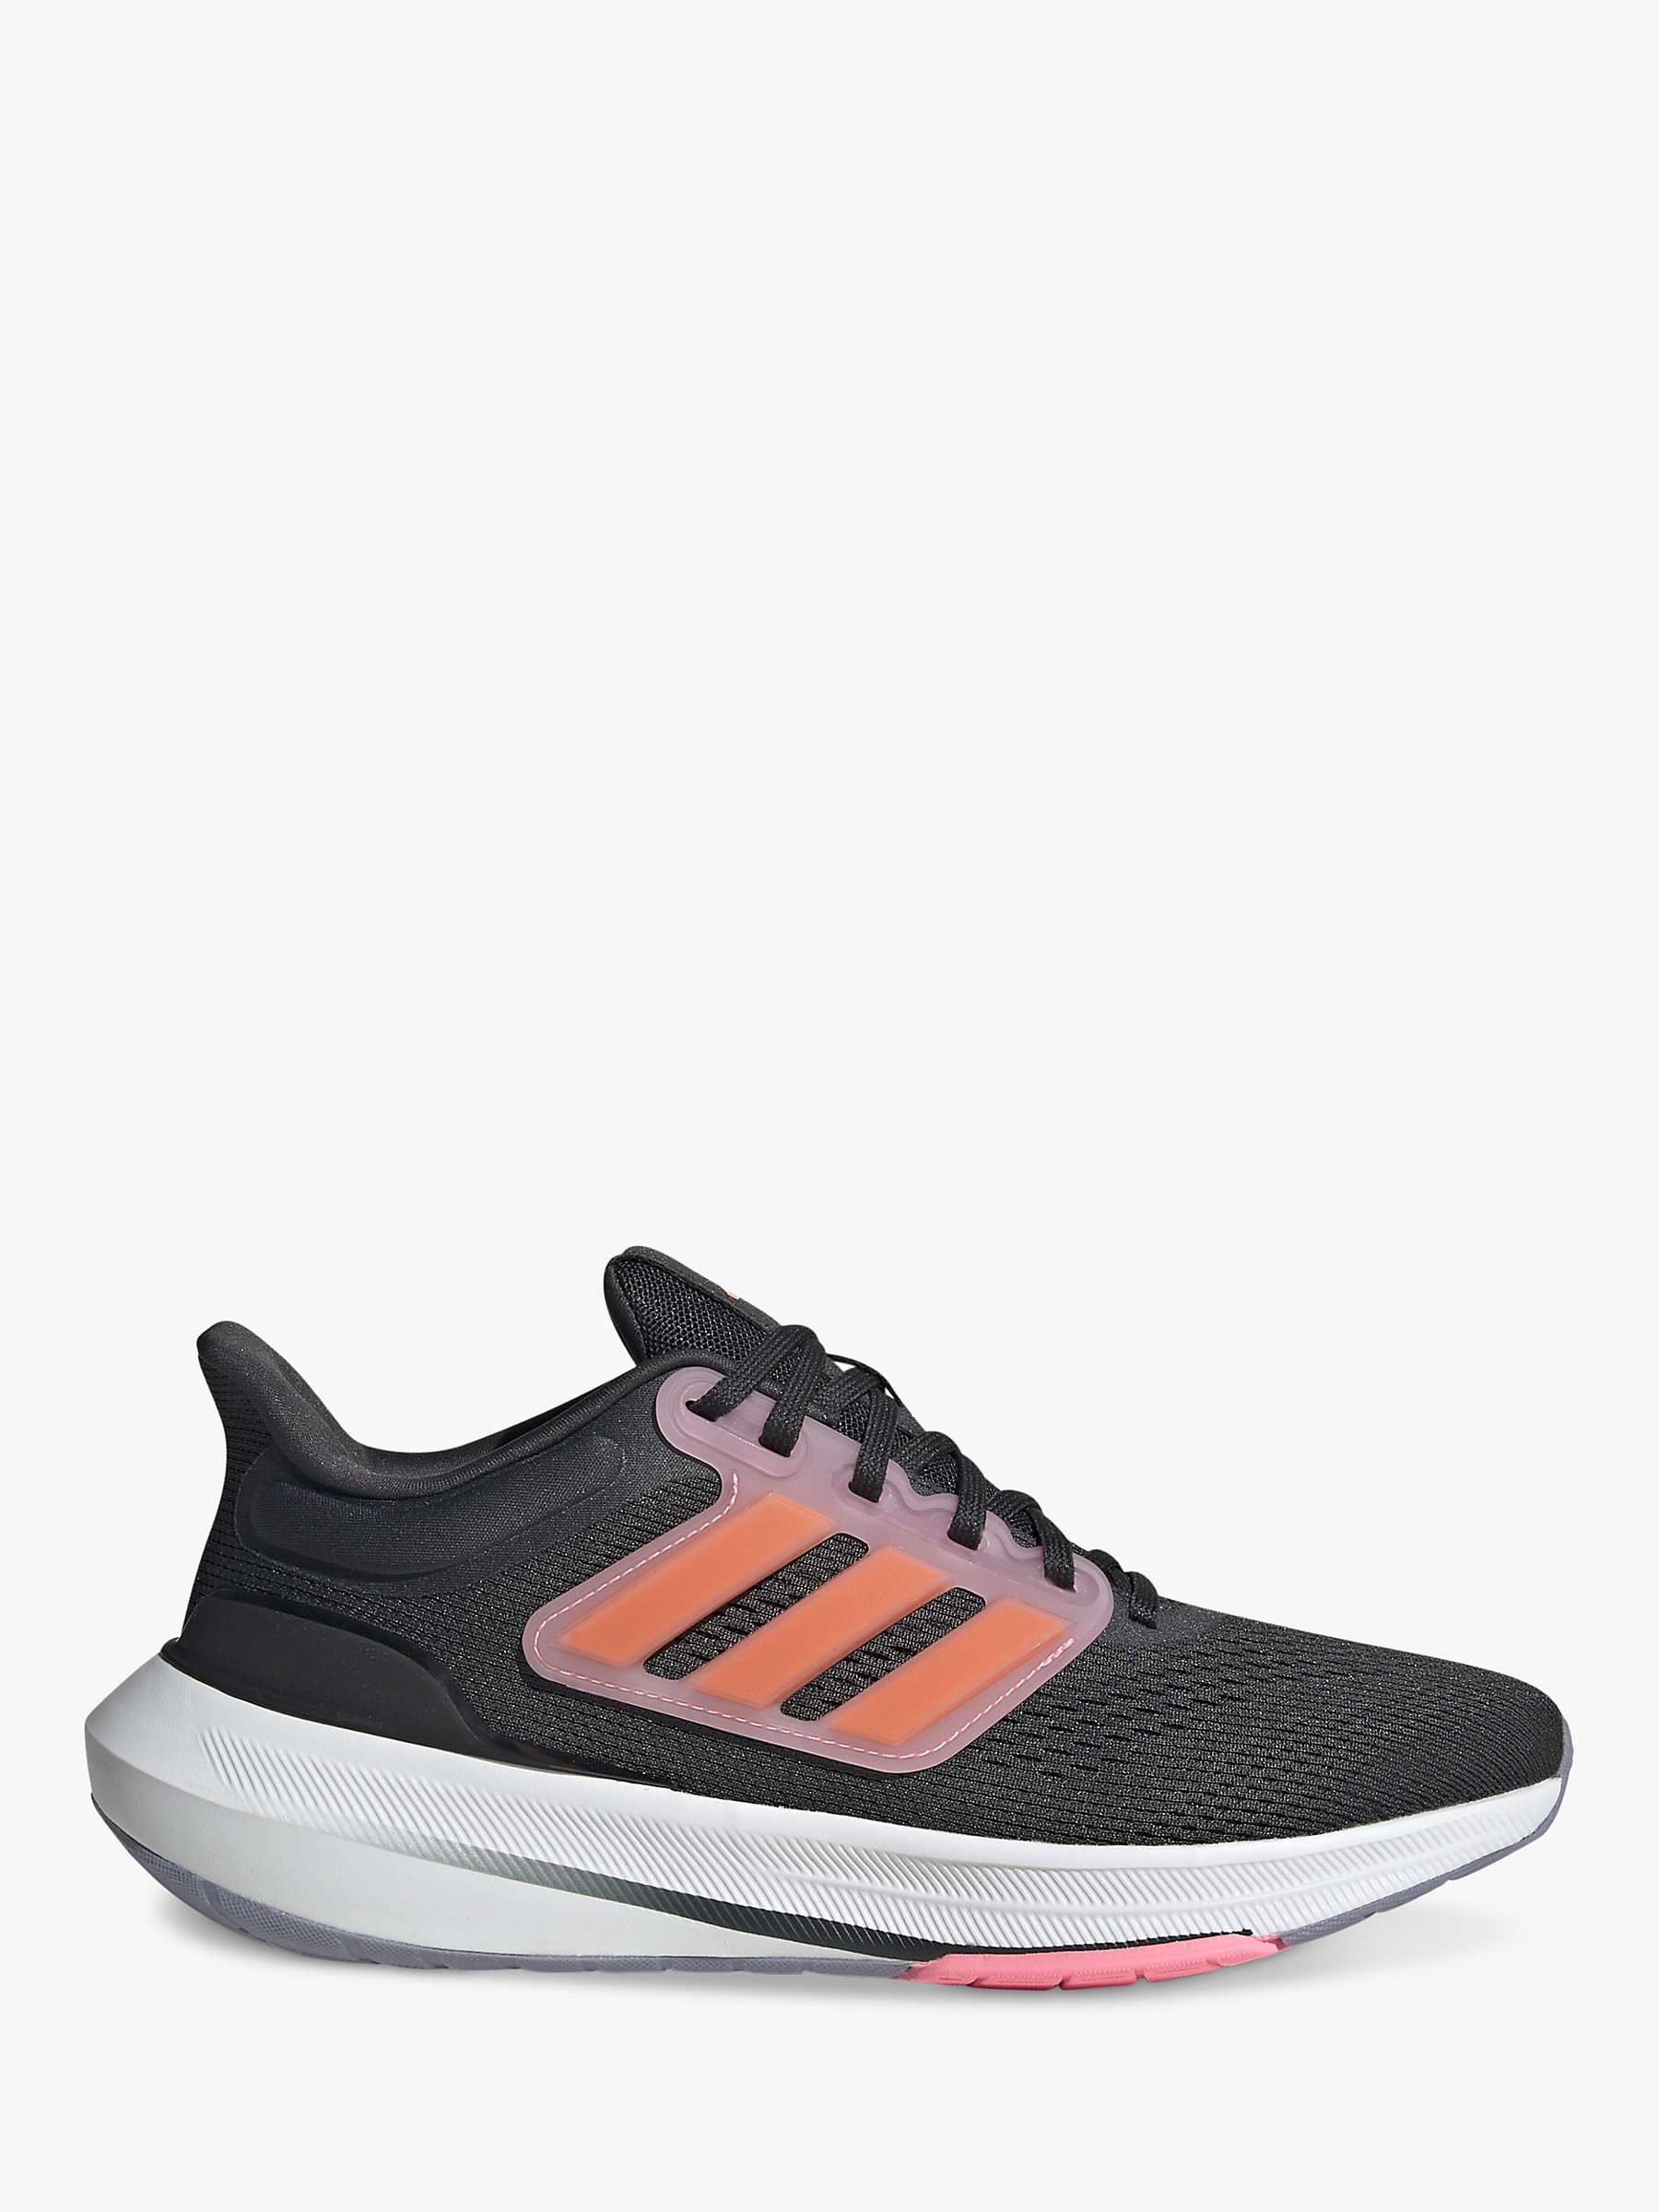 adidas Ultrabounce Women's Running Shoes, Carbon/Orange/Pink at John ...